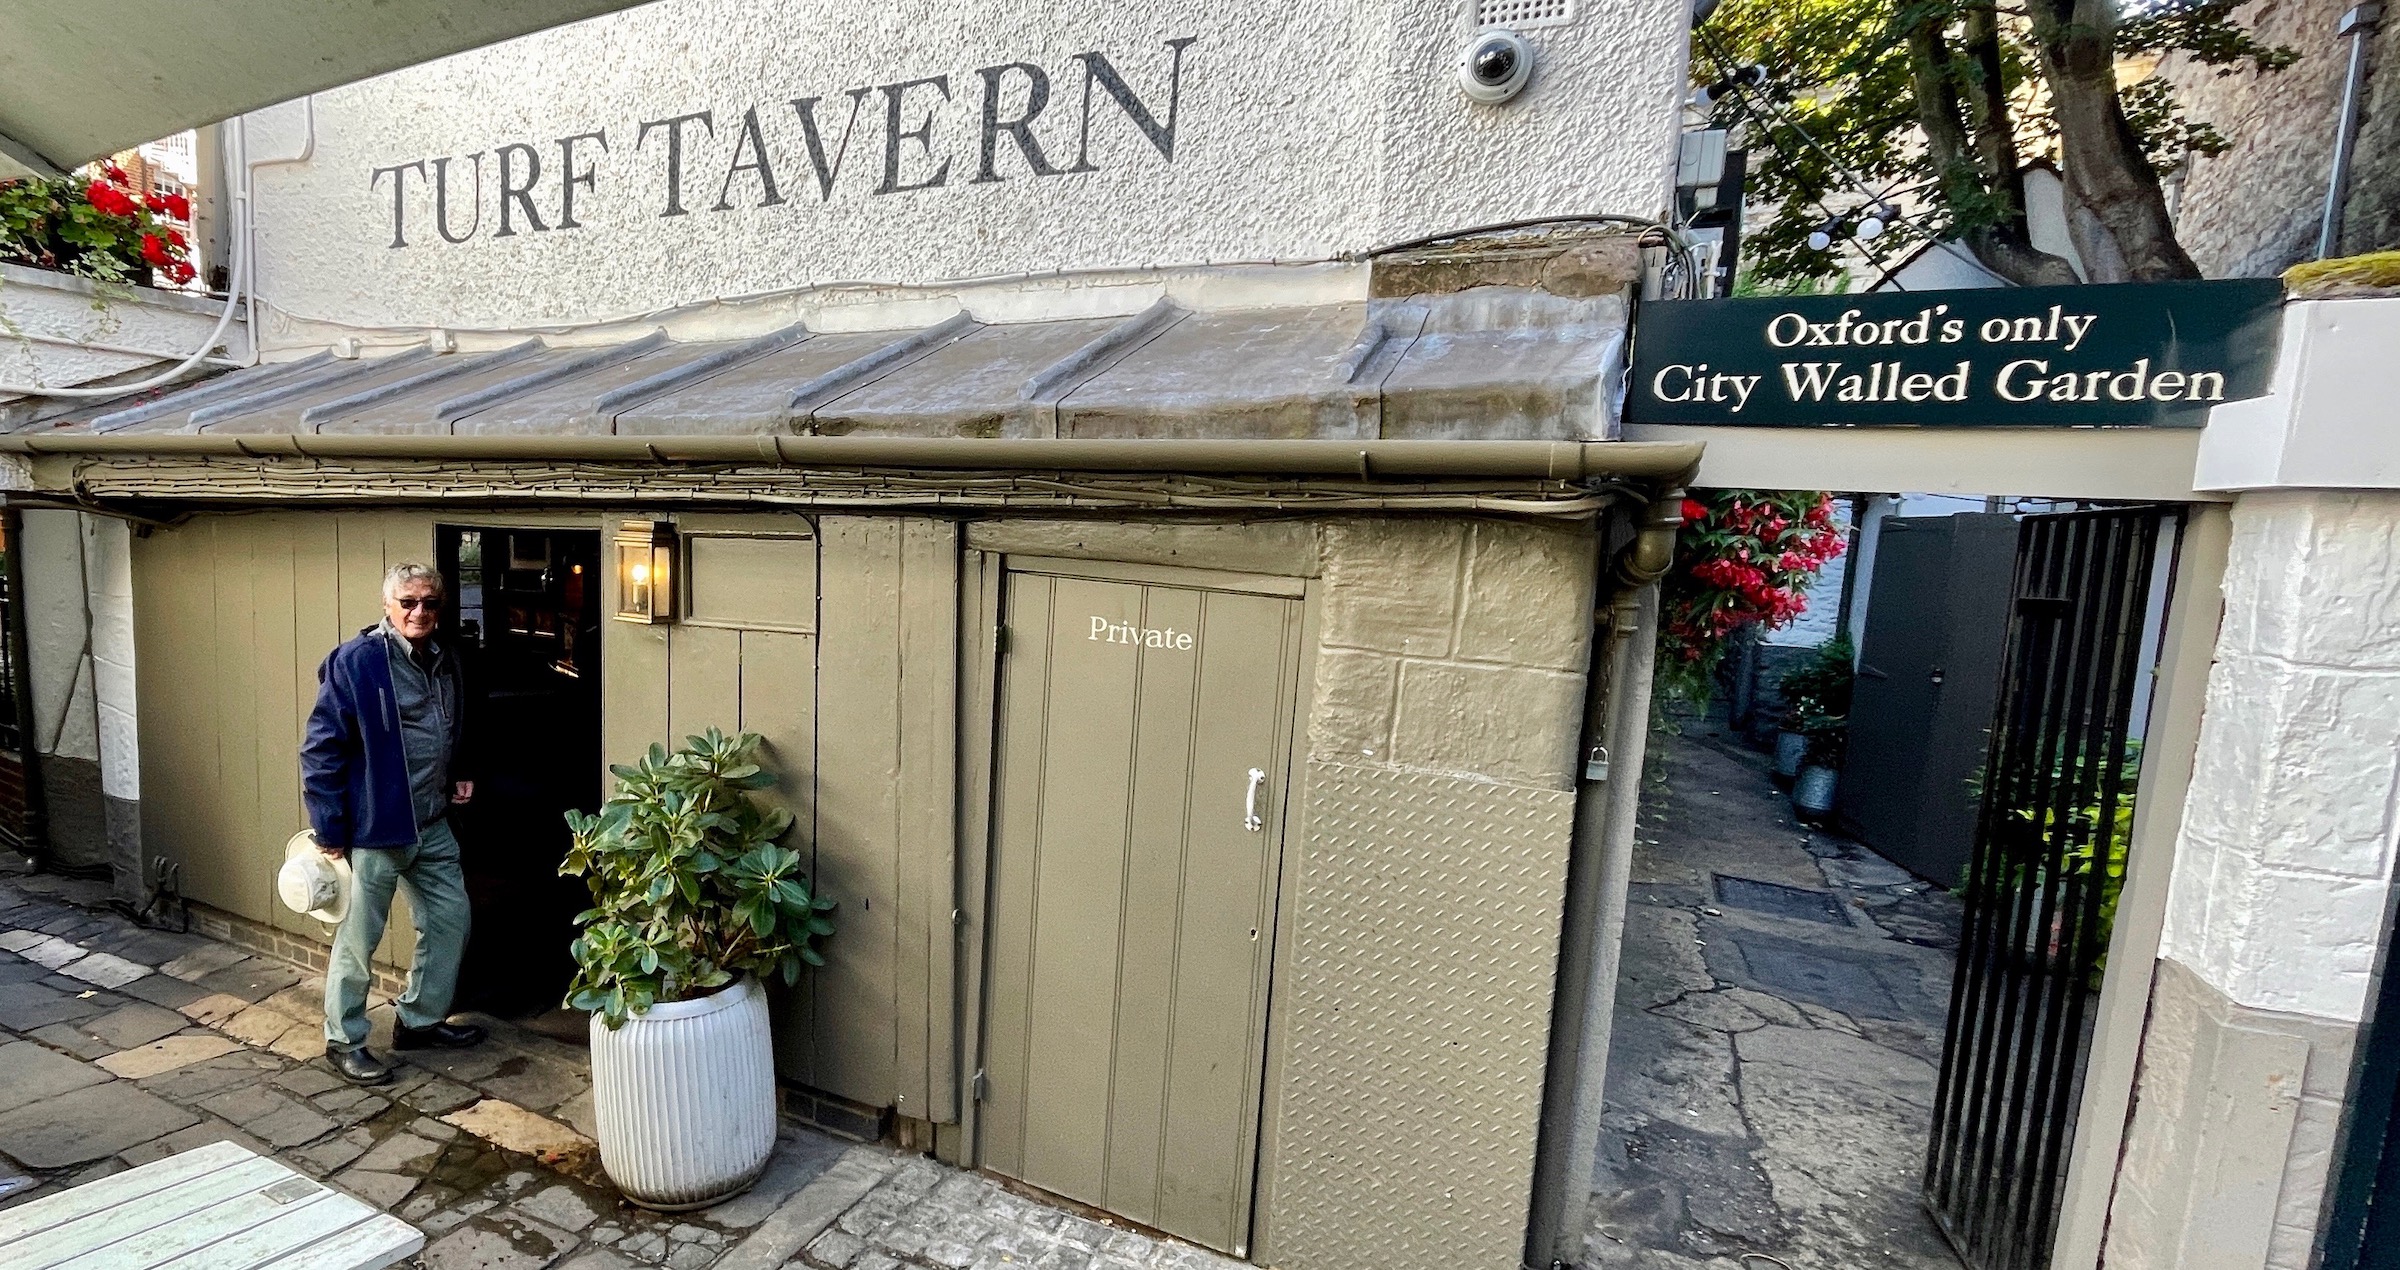 Entering the Turf Tavern, Oxford